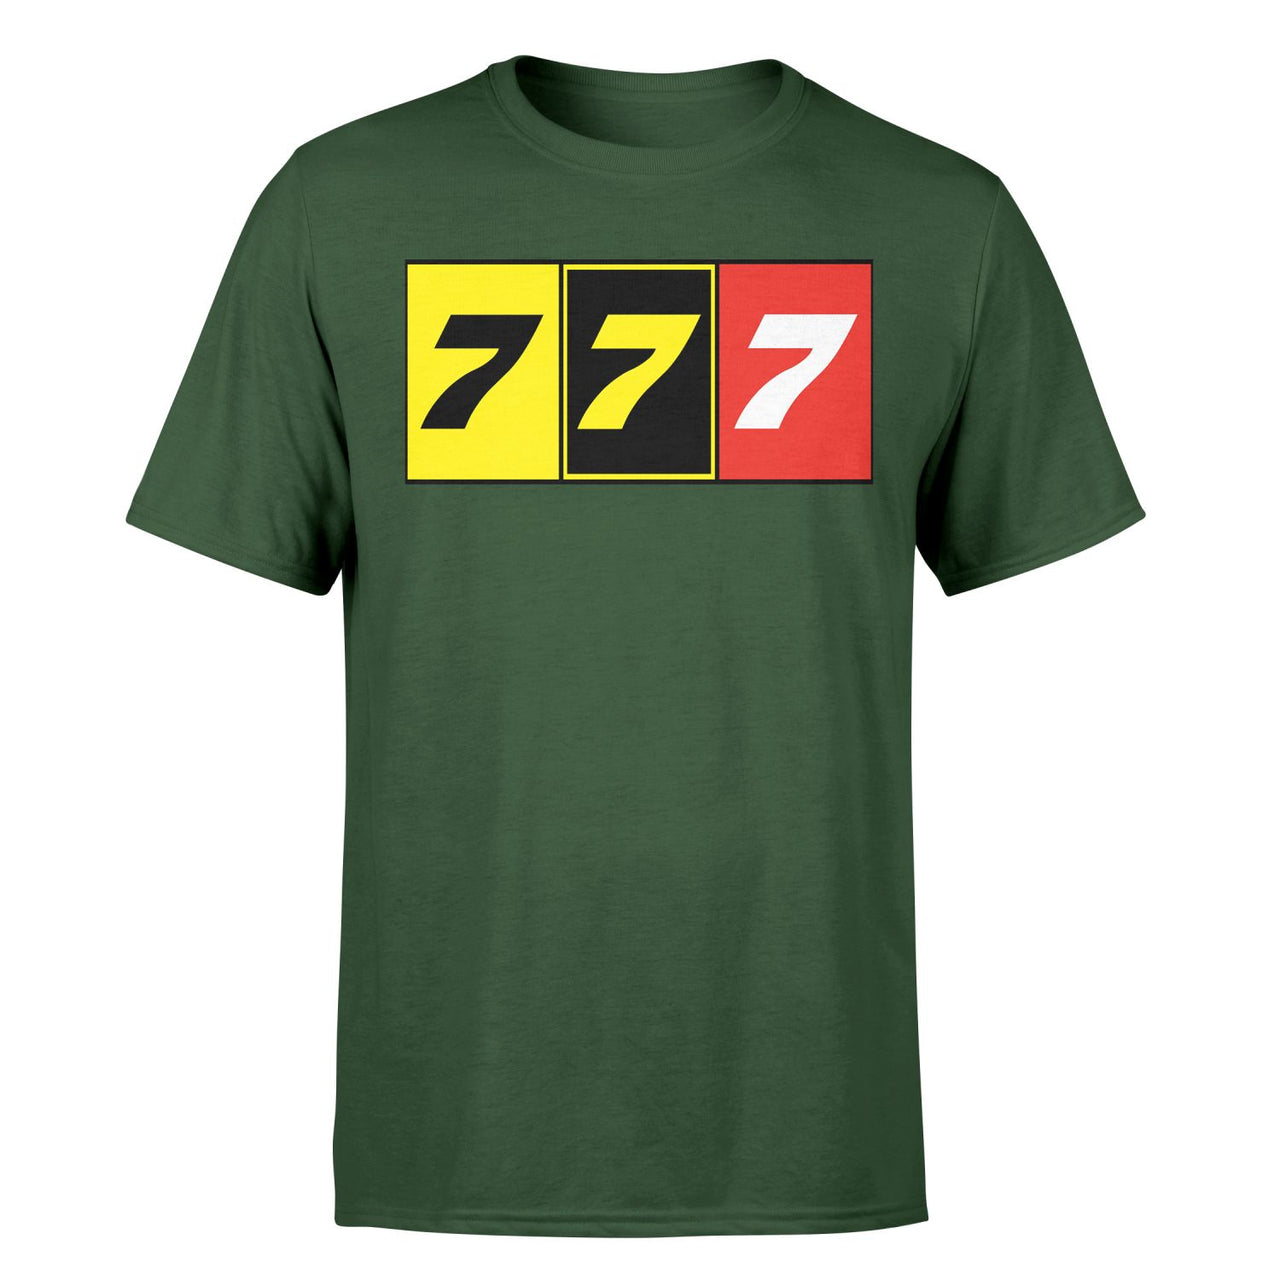 Flat Colourful 777 Designed T-Shirts